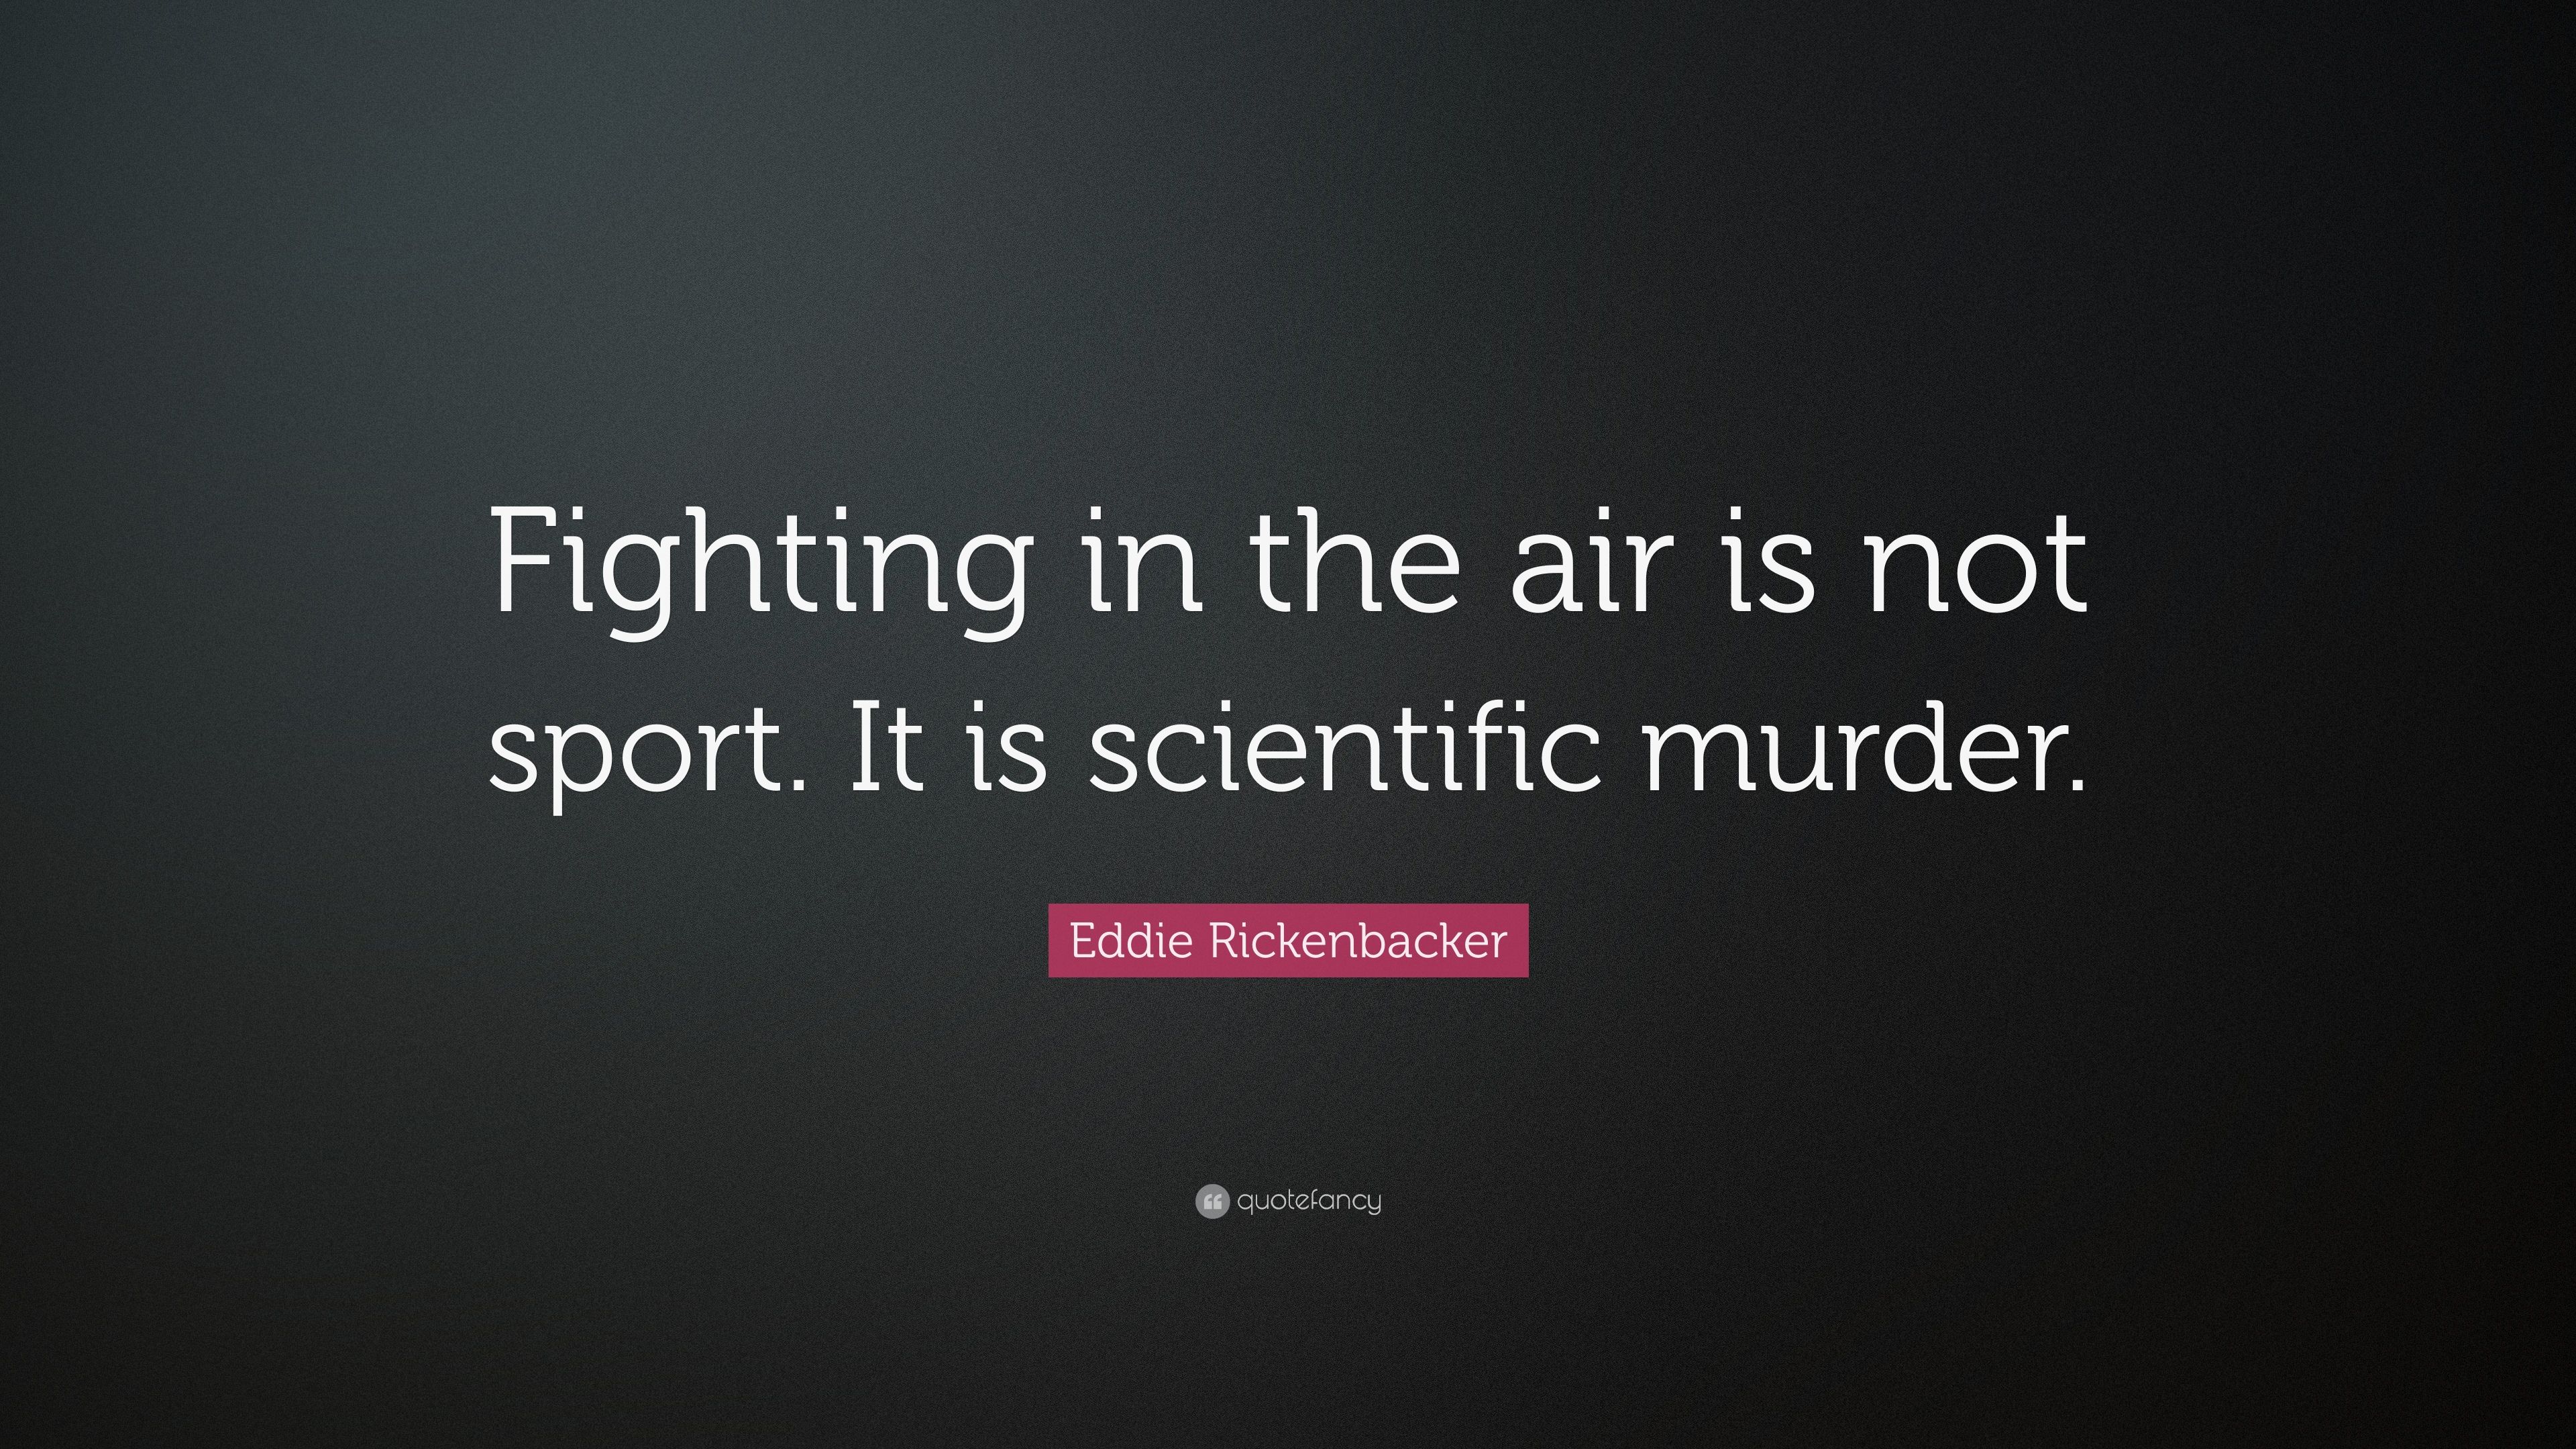 Eddie Rickenbacker Quote: “Fighting in the air is not sport. It is scientific murder.” (7 wallpaper)